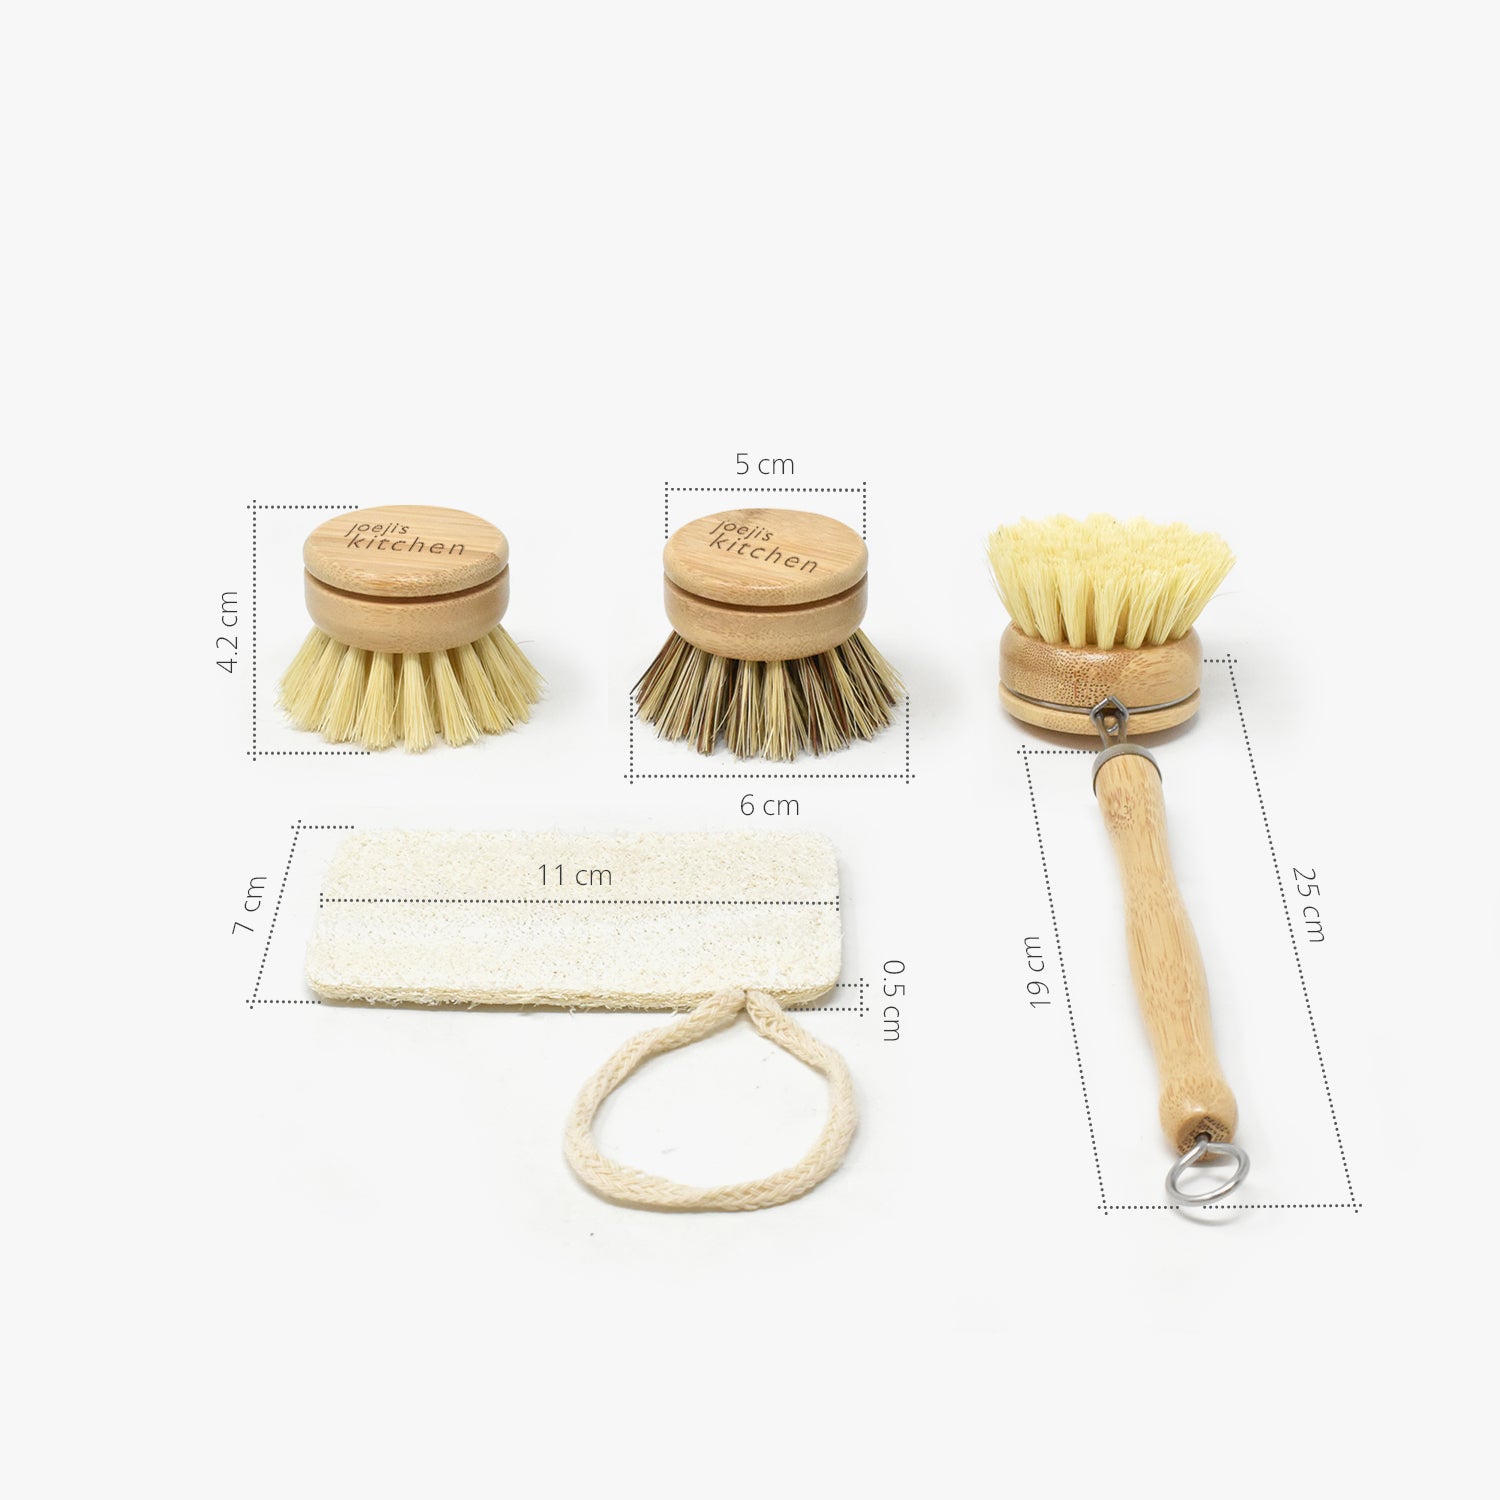 A-1ux Wooden Dish Brush, A-1Ux Bamboo Wood & Natural Bristle